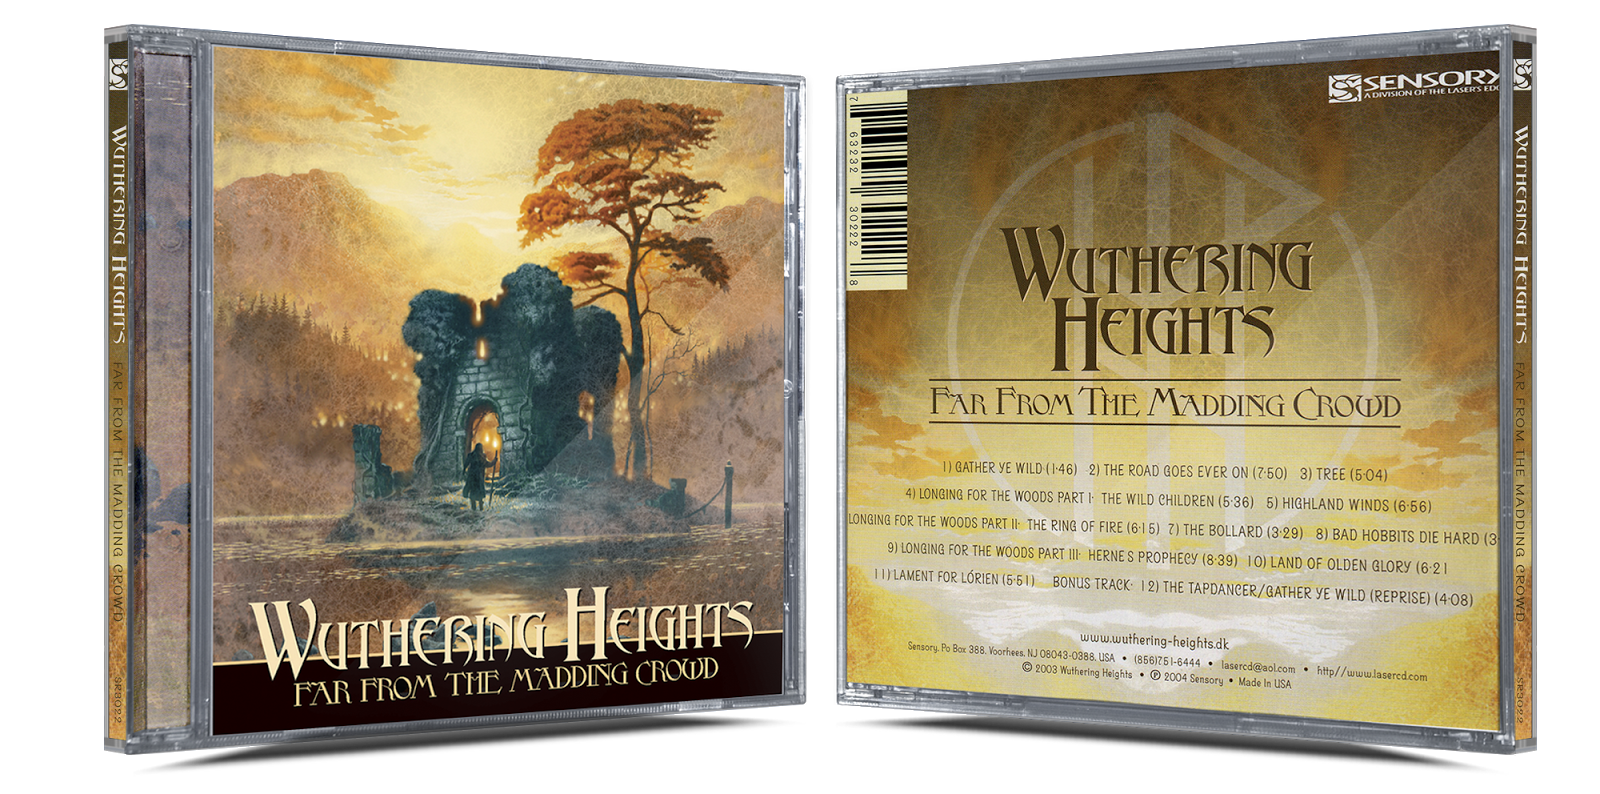 [Pedido] Wuthering Heights - Discografia